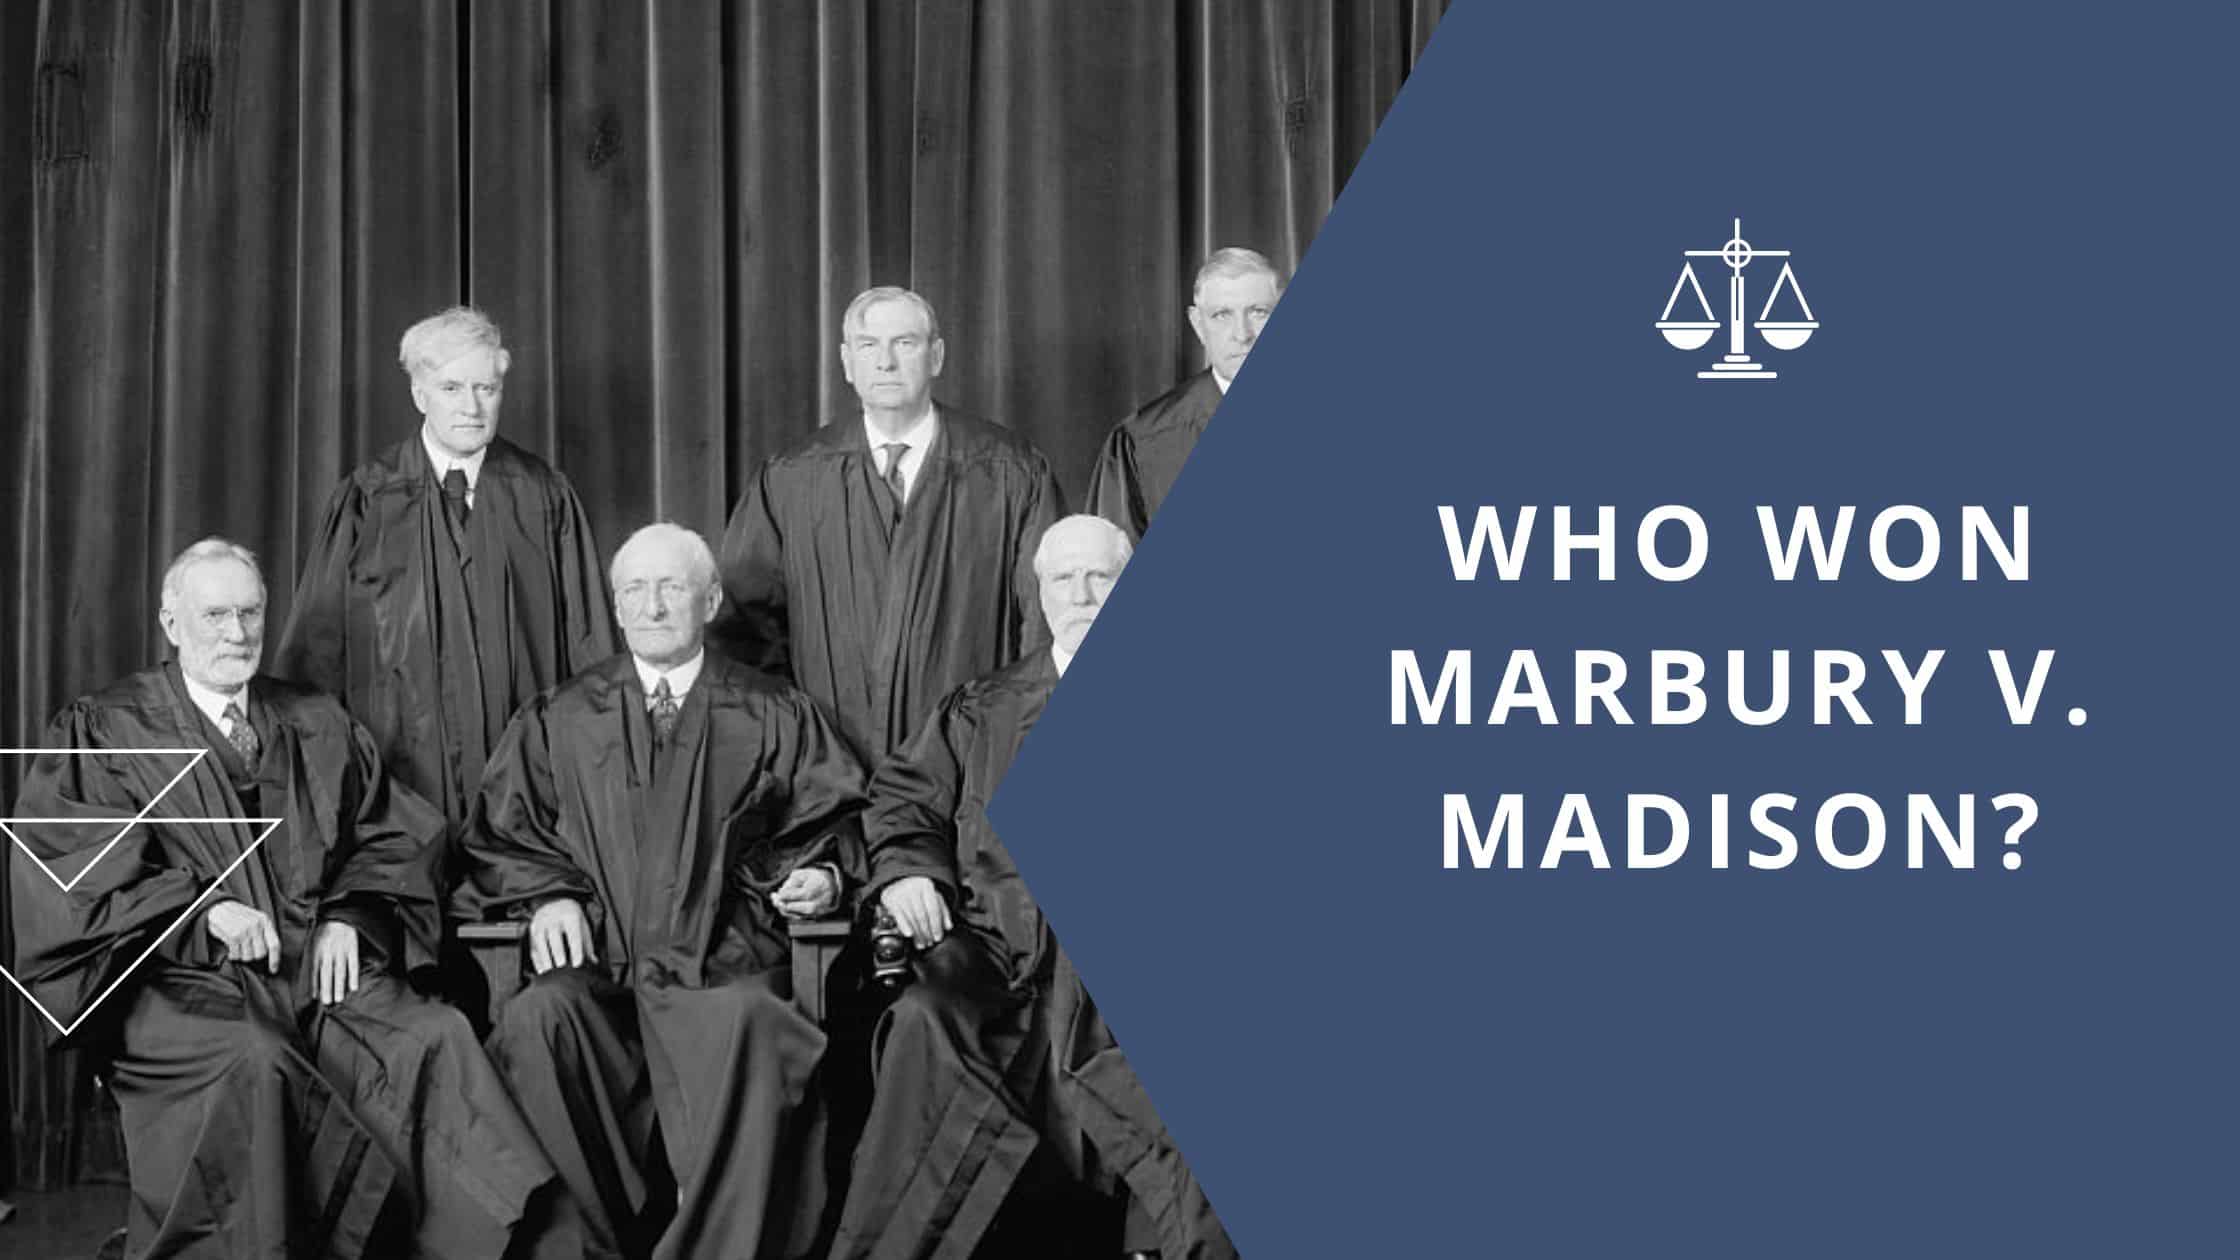 supreme court case study 1 marbury v madison